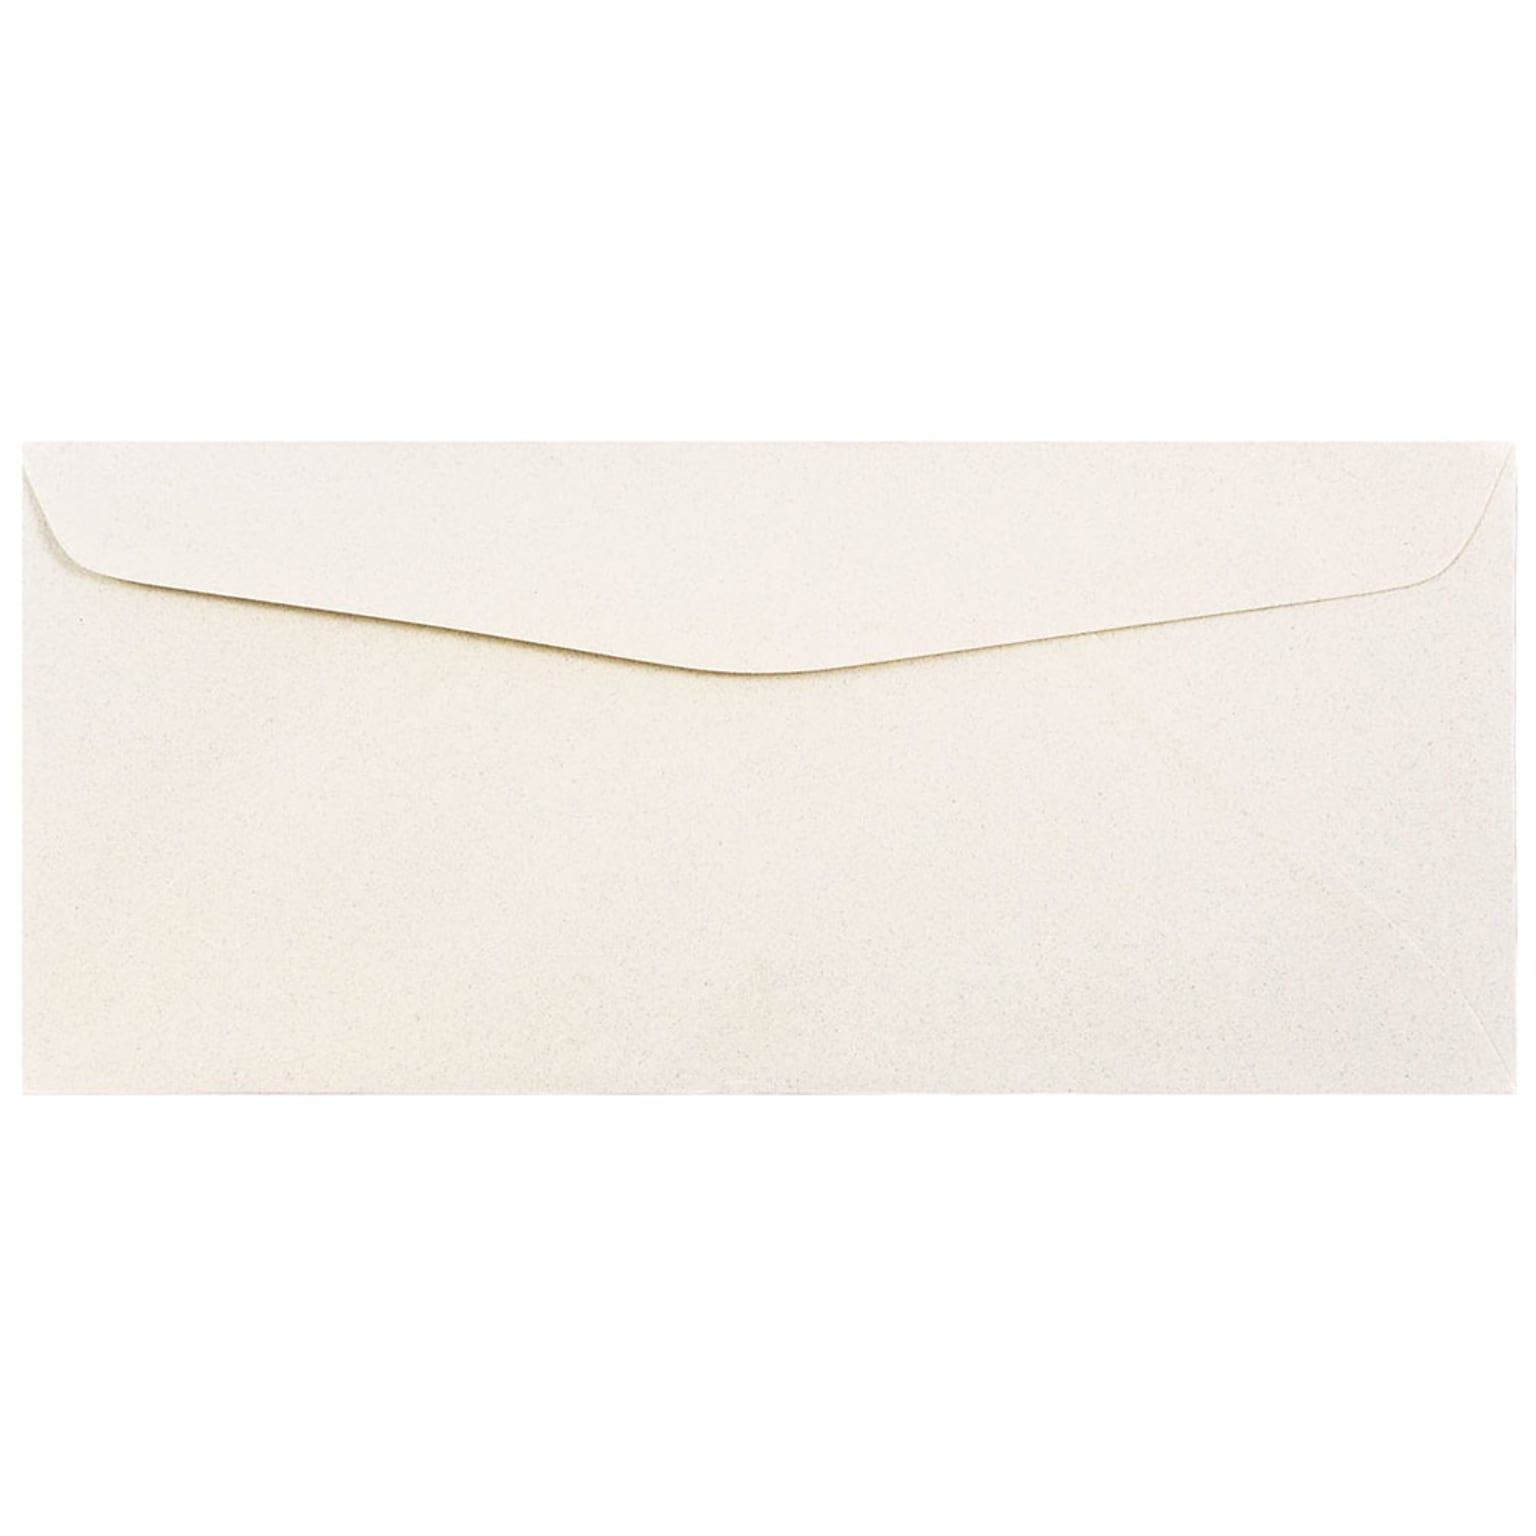 JAM Paper #10 Business Envelope, 4 1/8 x 9 1/2, Gypsum, 25/Pack (9222)